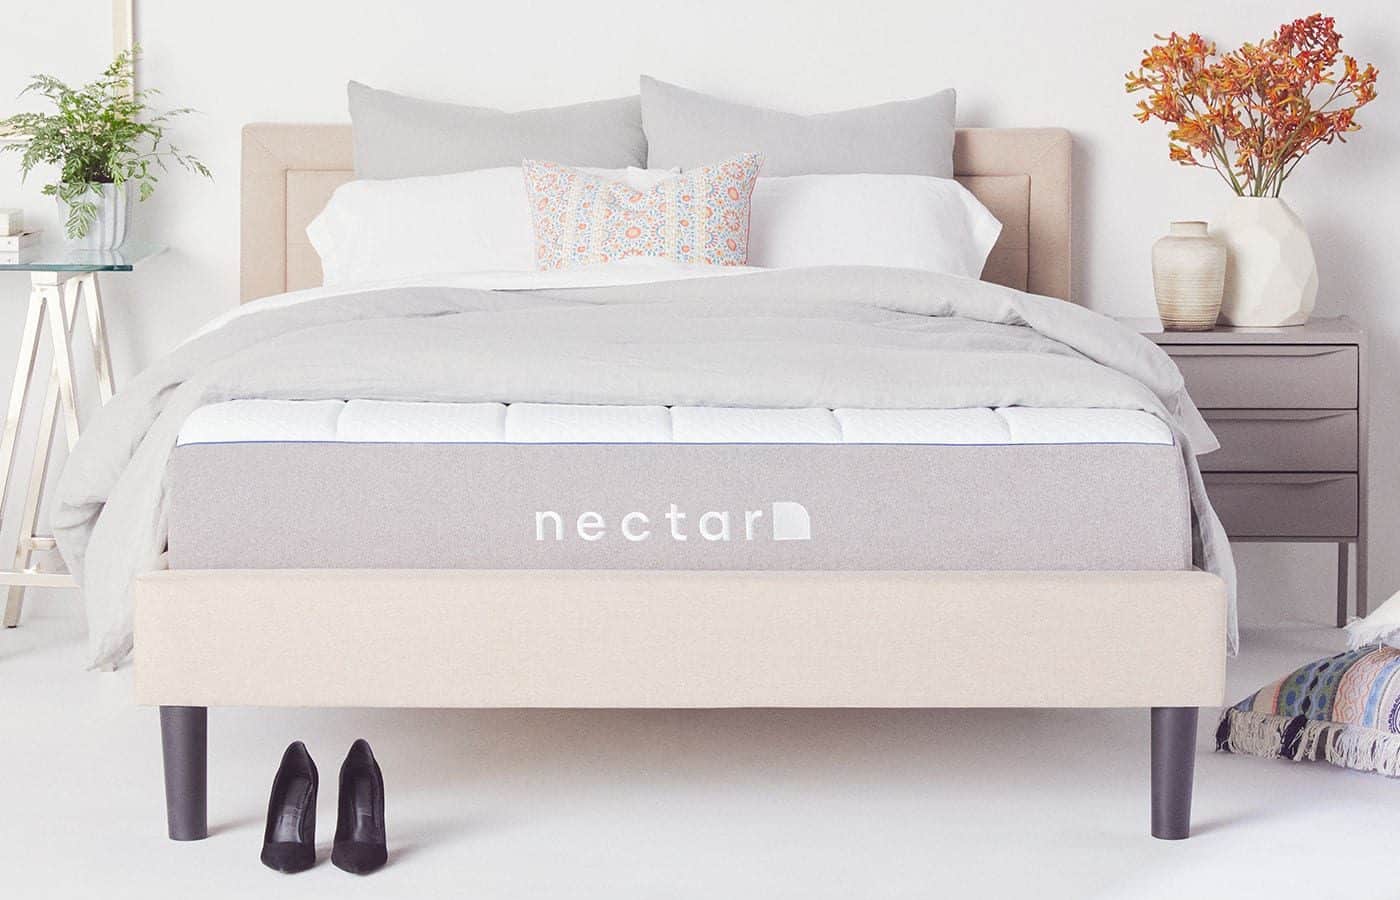 nectar mattress review back pain